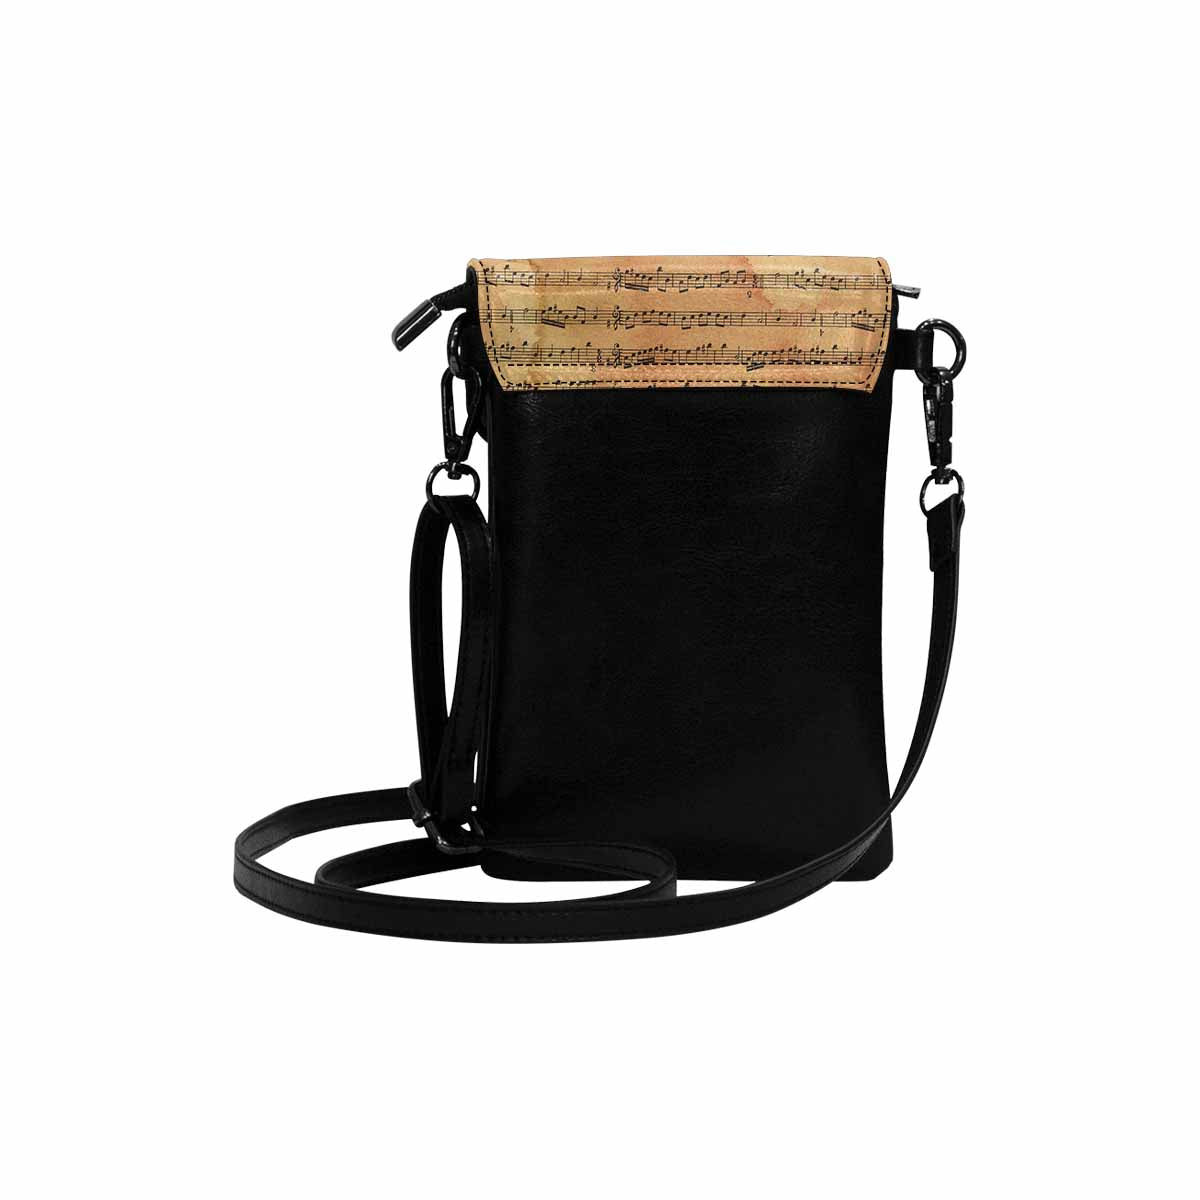 General Victorian cell phone purse, mobile purse, Design 23